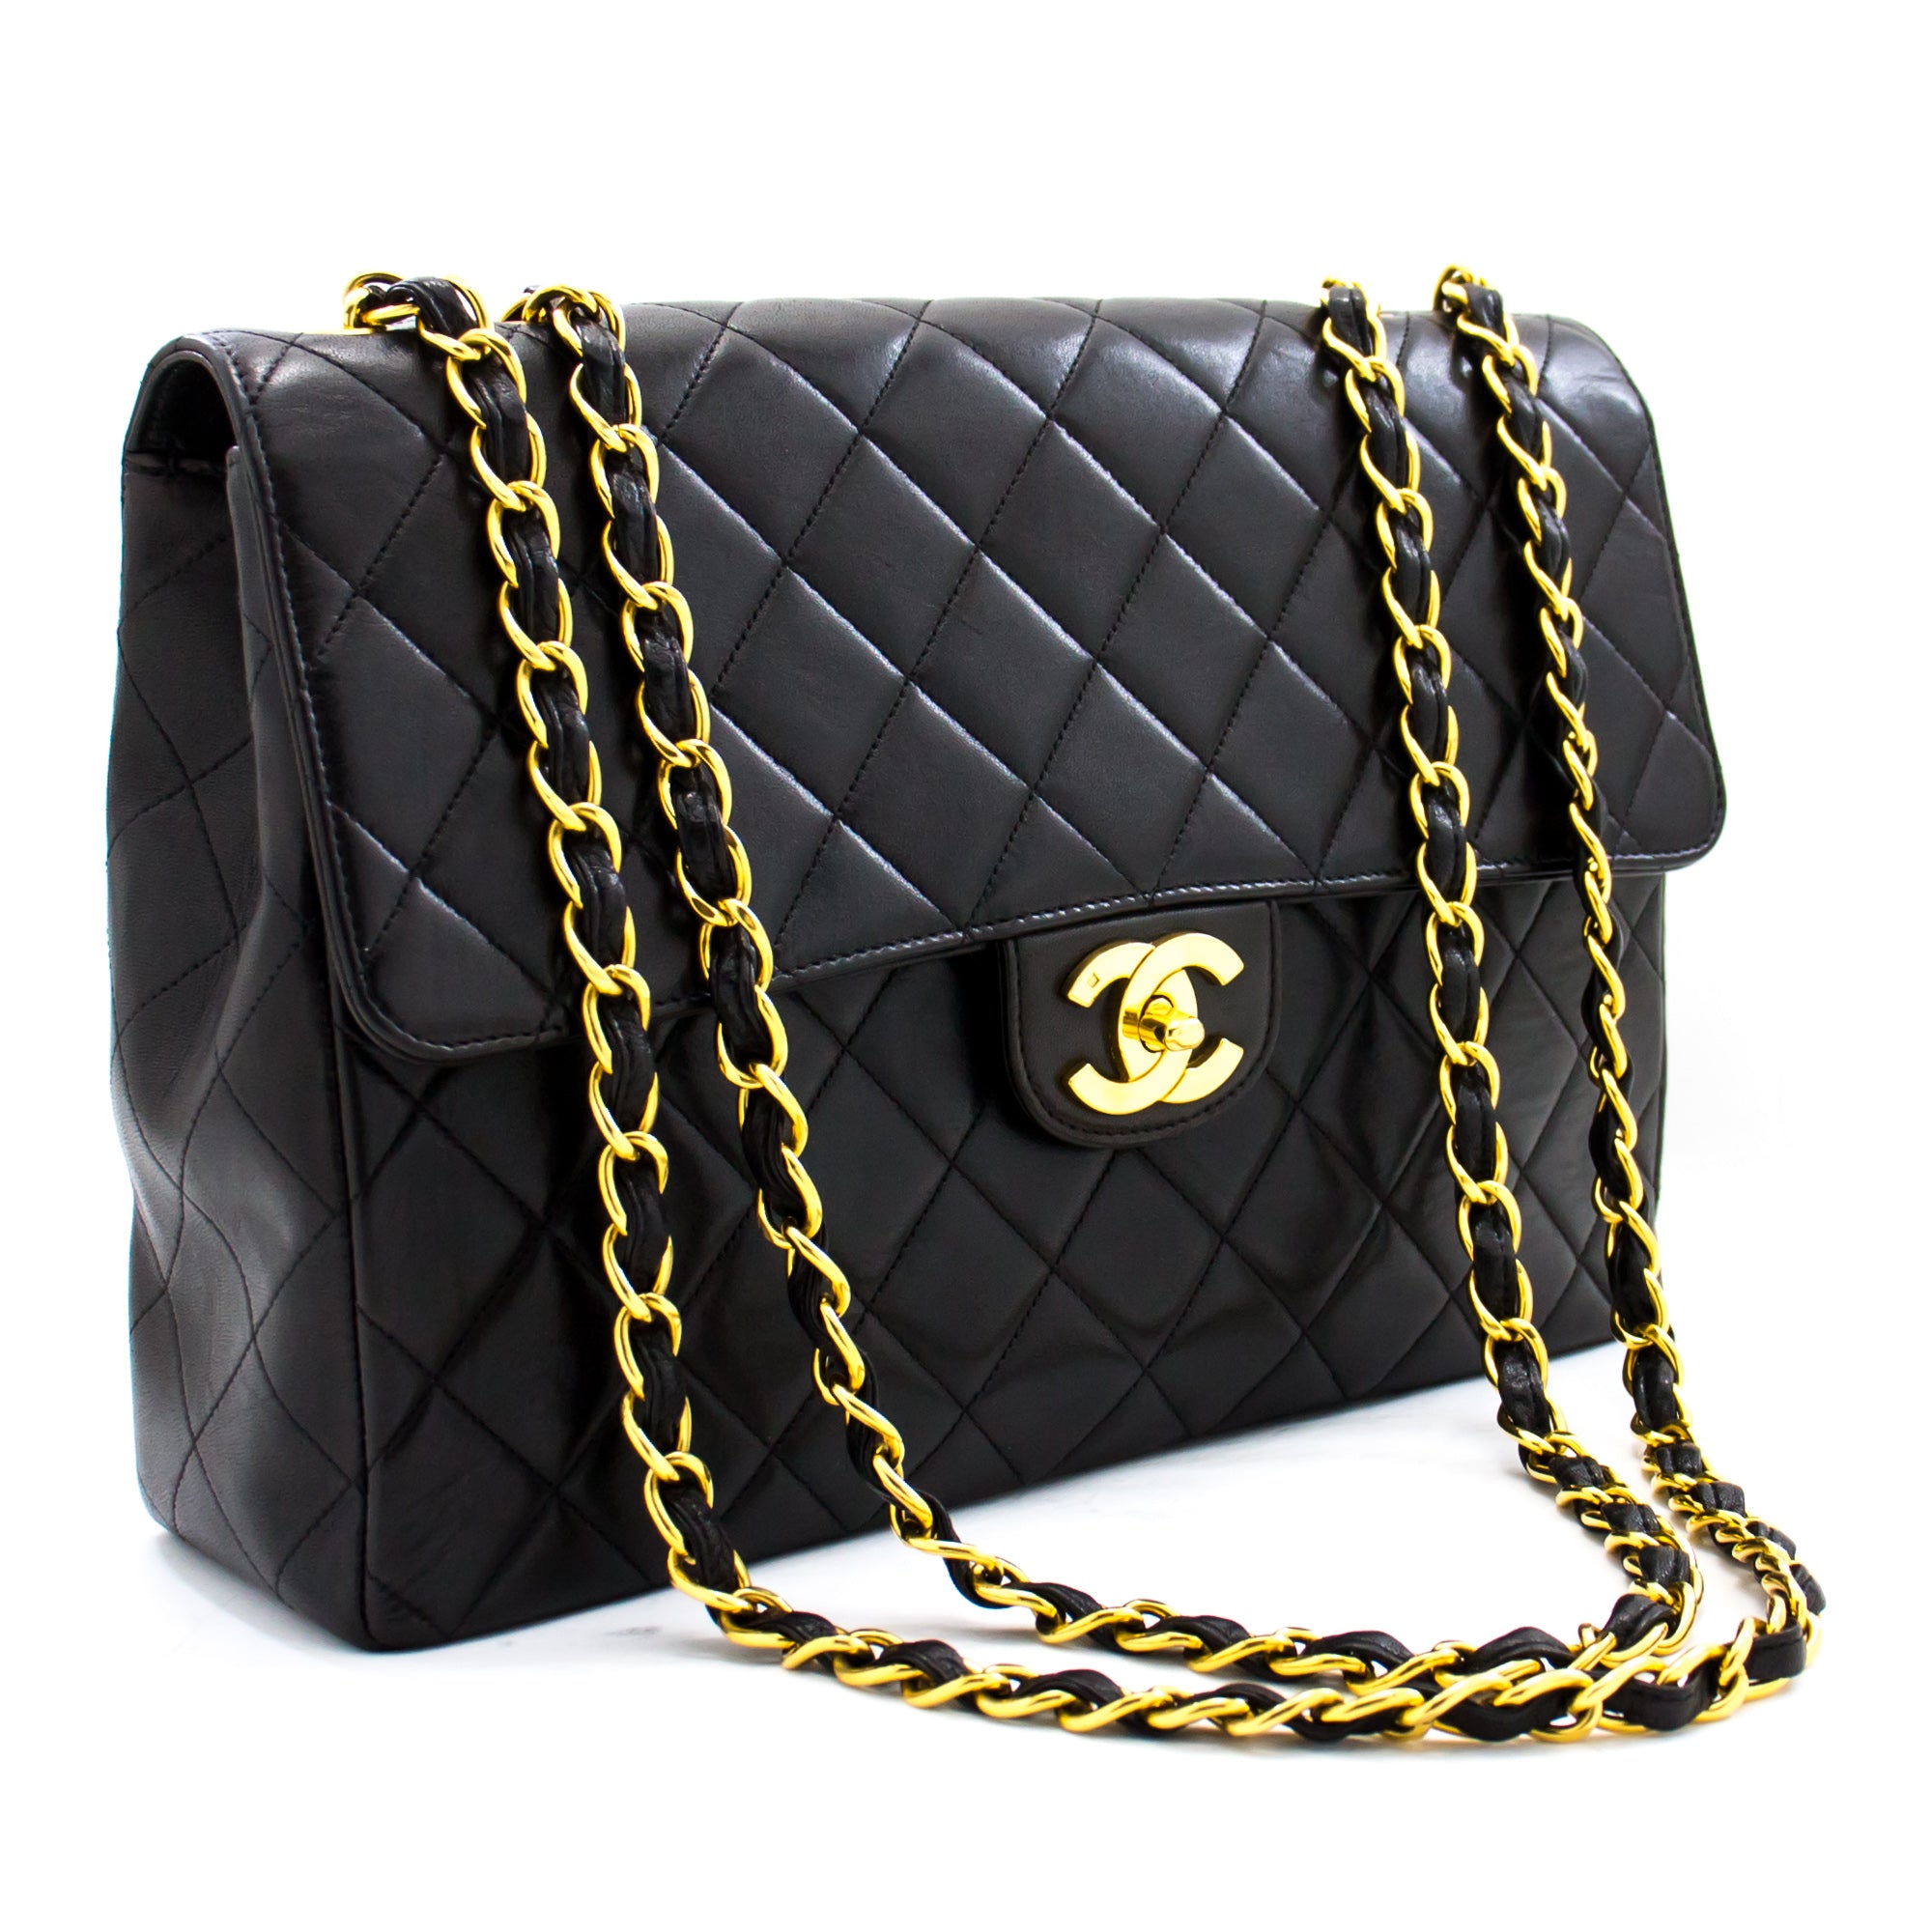 Chanel Jumbo Large Chain Shoulder Bag Flap